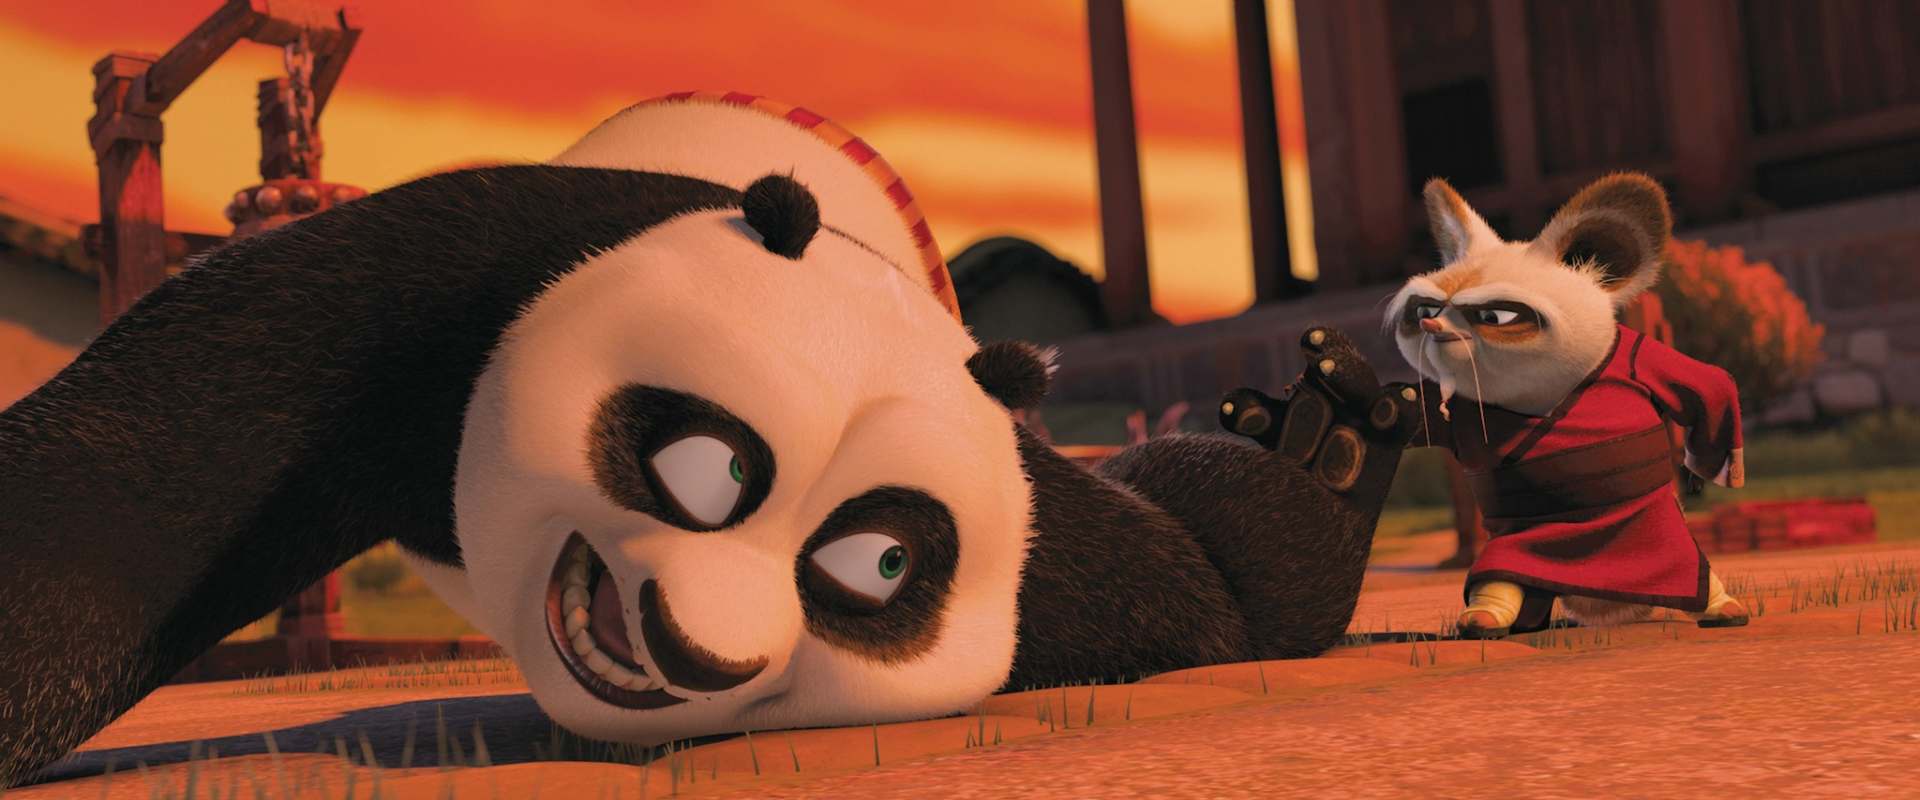 Kung Fu Panda background 1